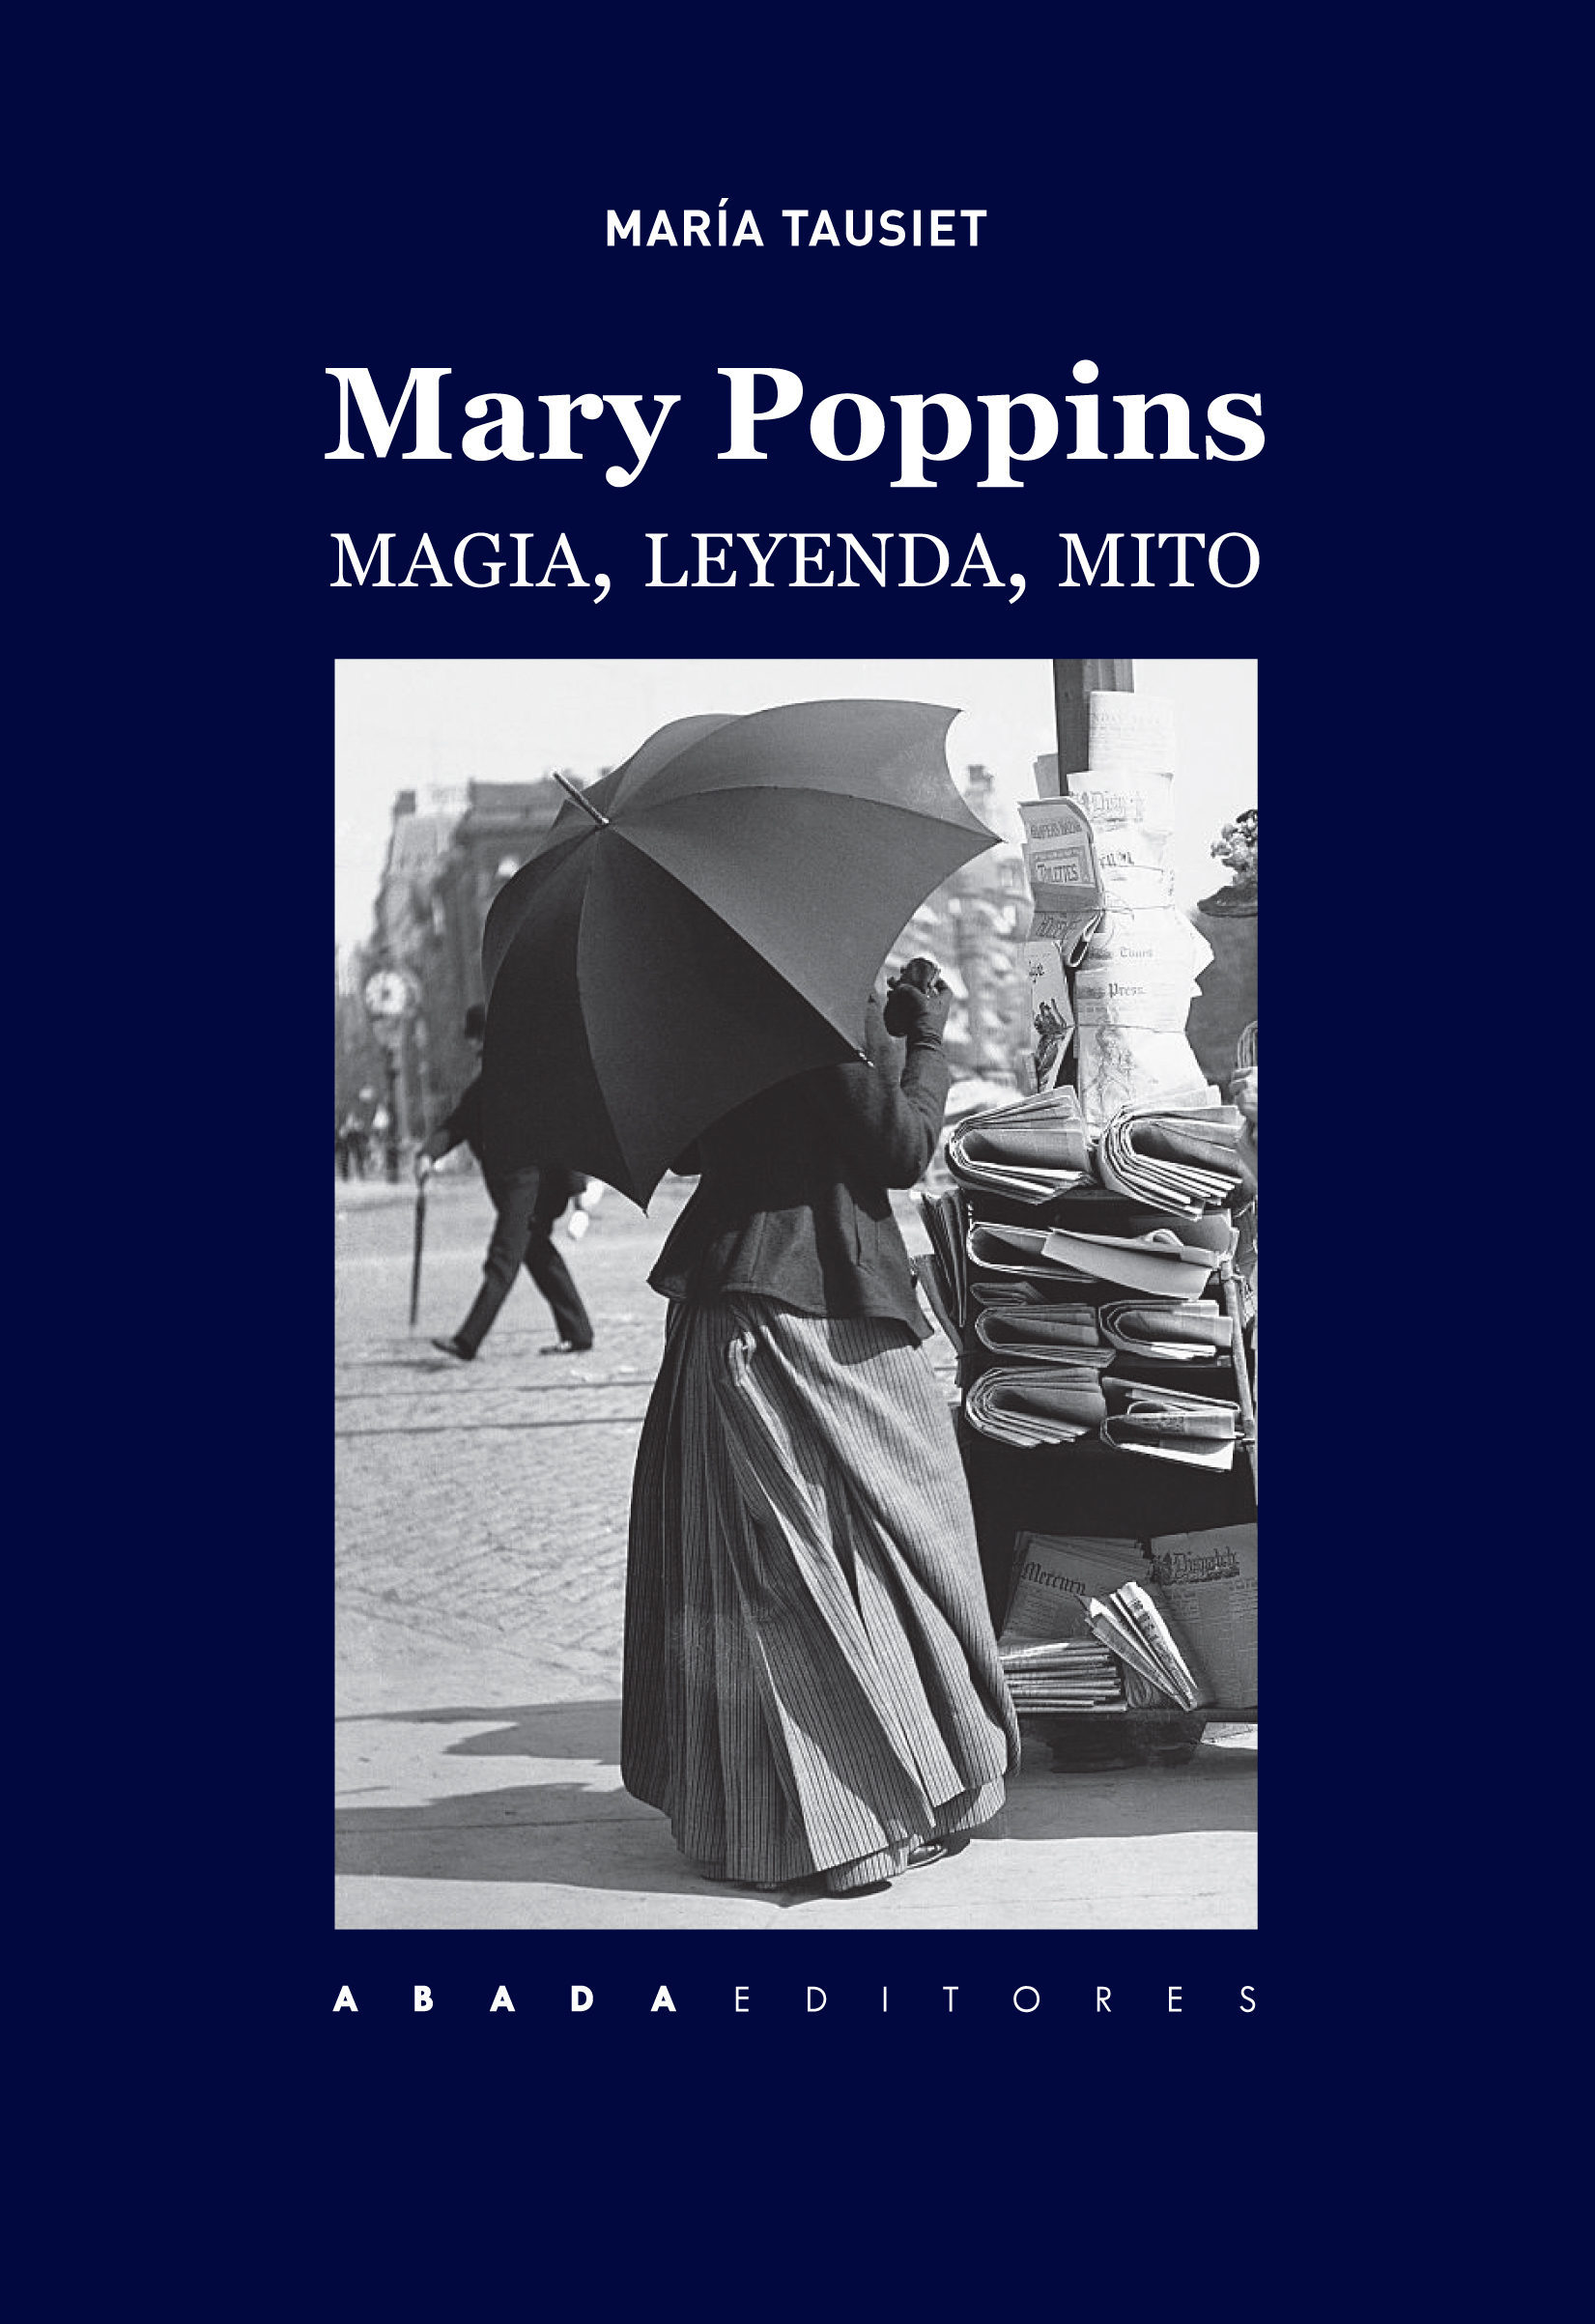 María Tausiet: Mary Poppins. Magia, leyenda, mito